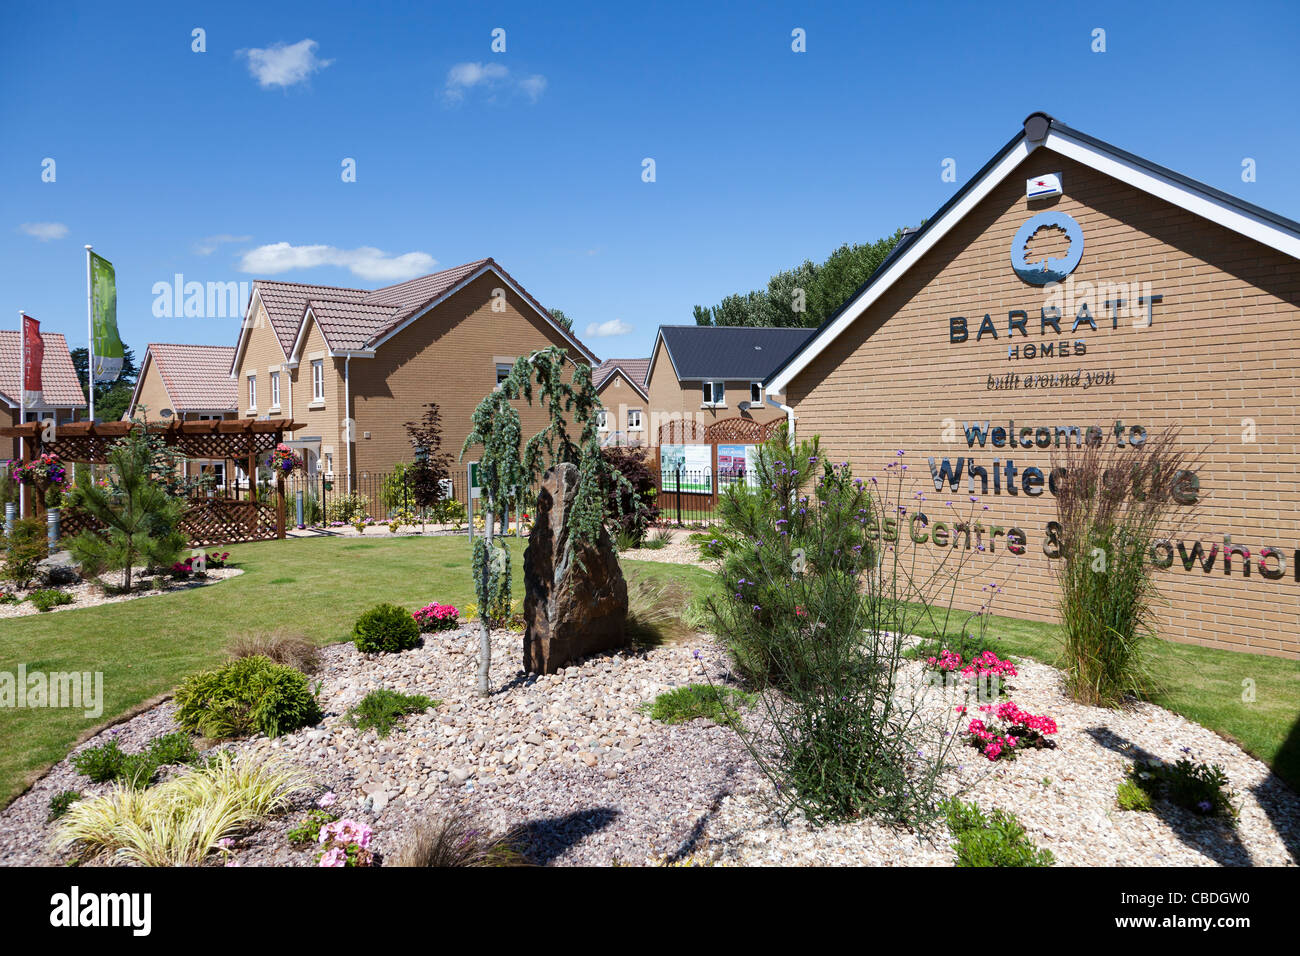 Barratt showhouse su Whitecastle nuova station wagon Abergavenny Wales UK Foto Stock